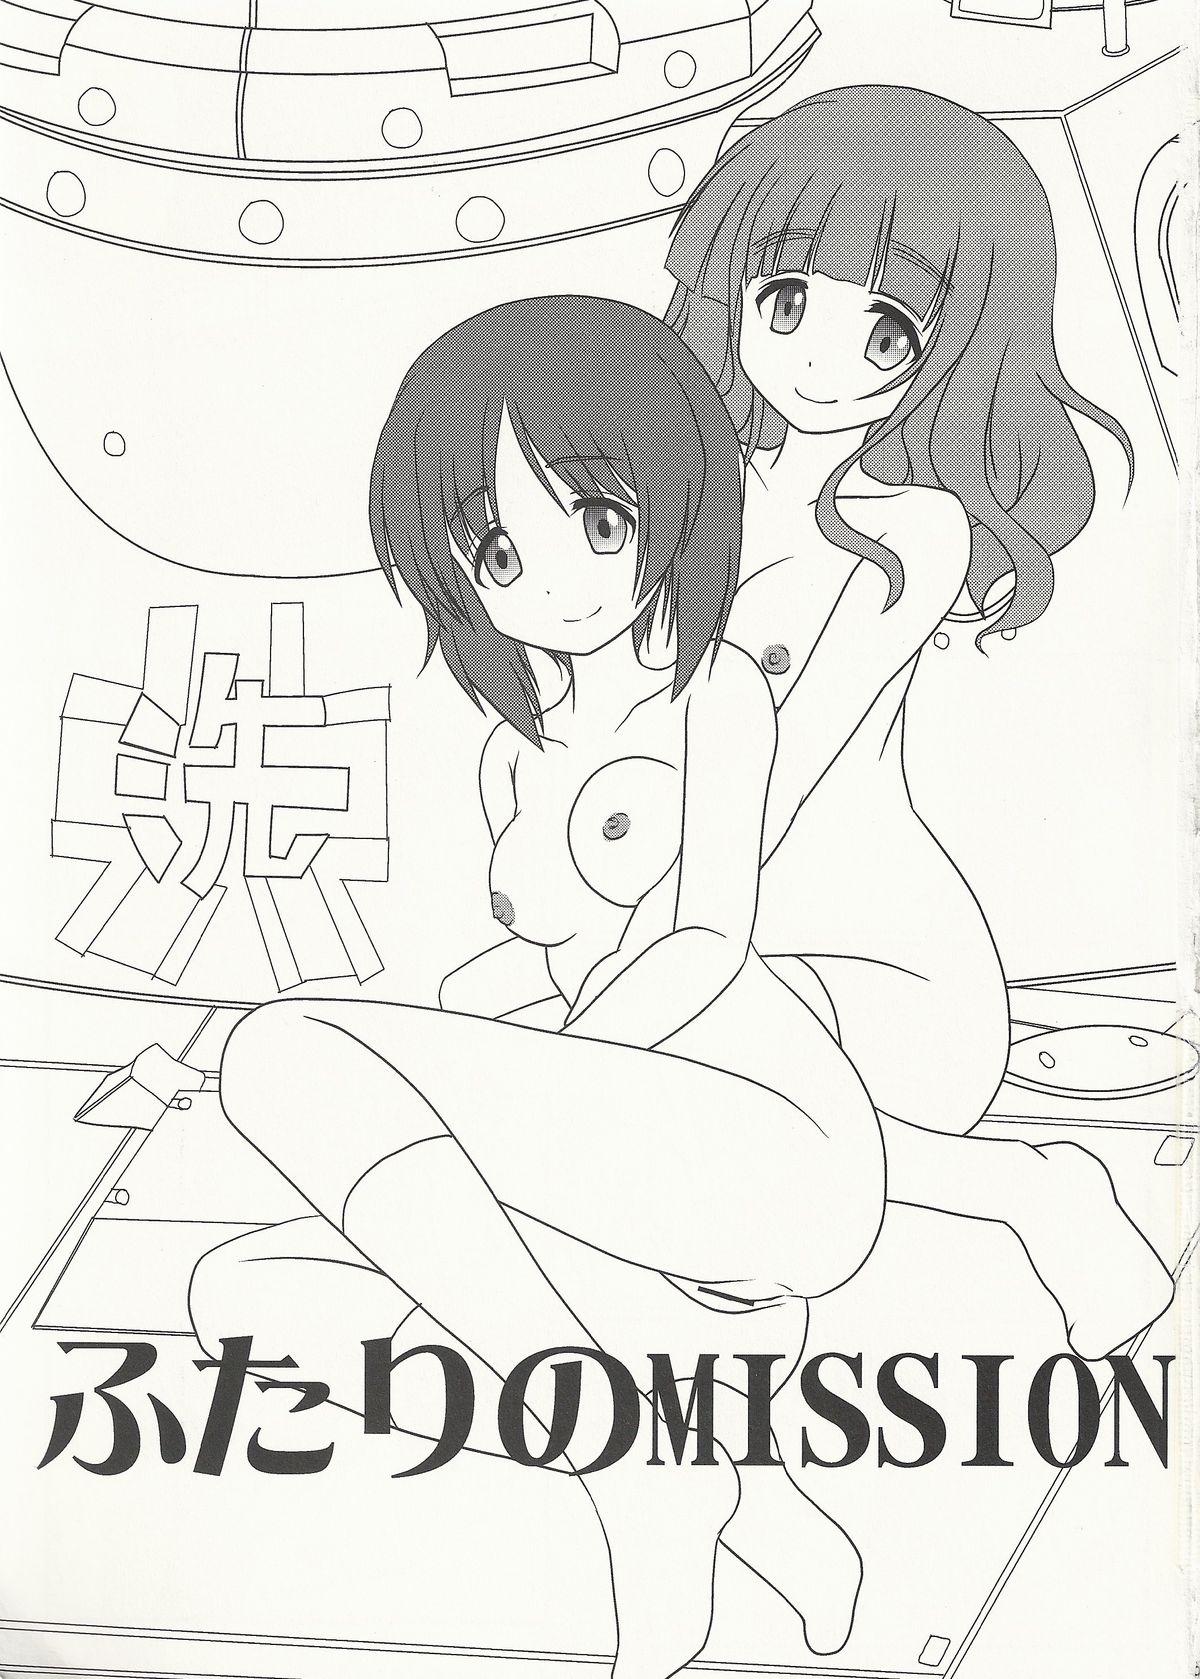 Mallu Futari no MISSION - Girls und panzer Amiga - Page 2